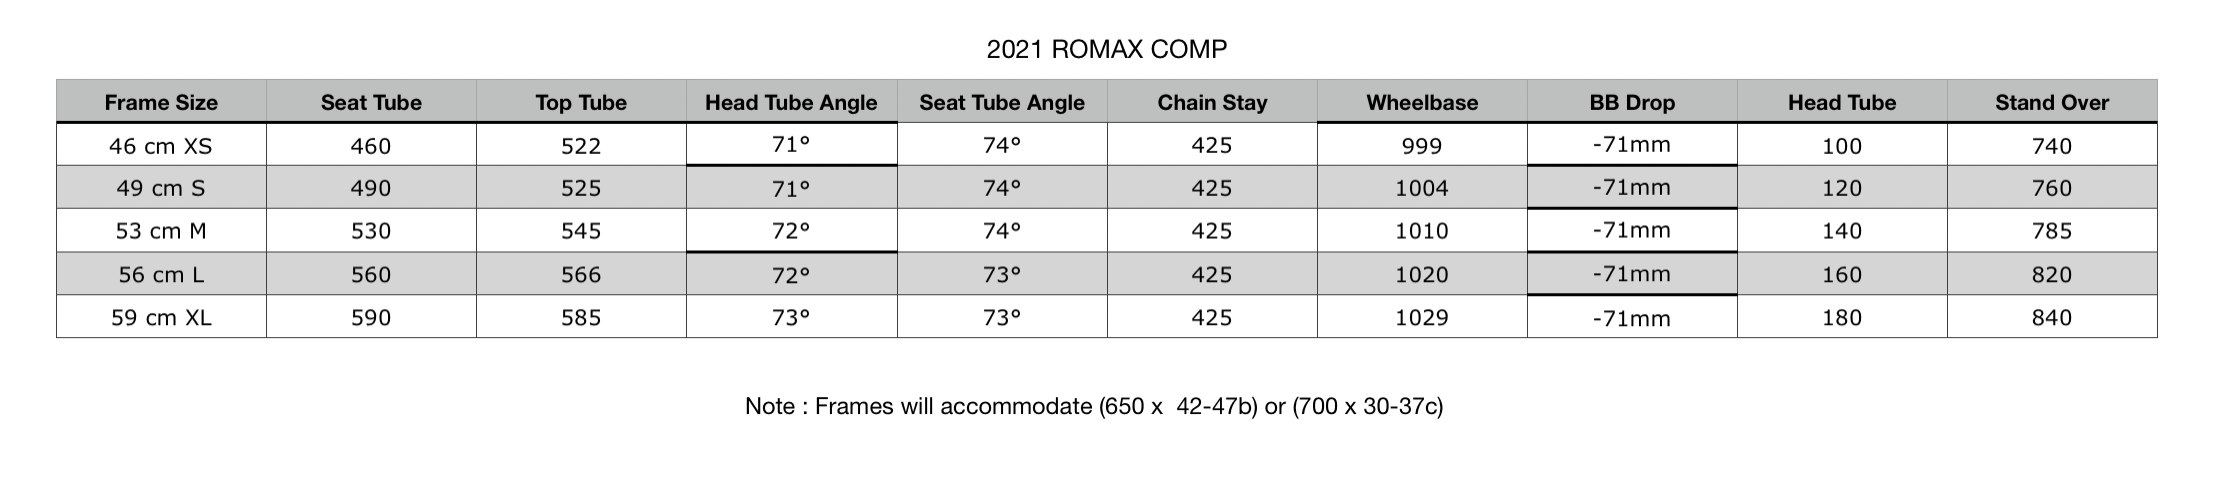 2021 Romax Comp Geometry.png